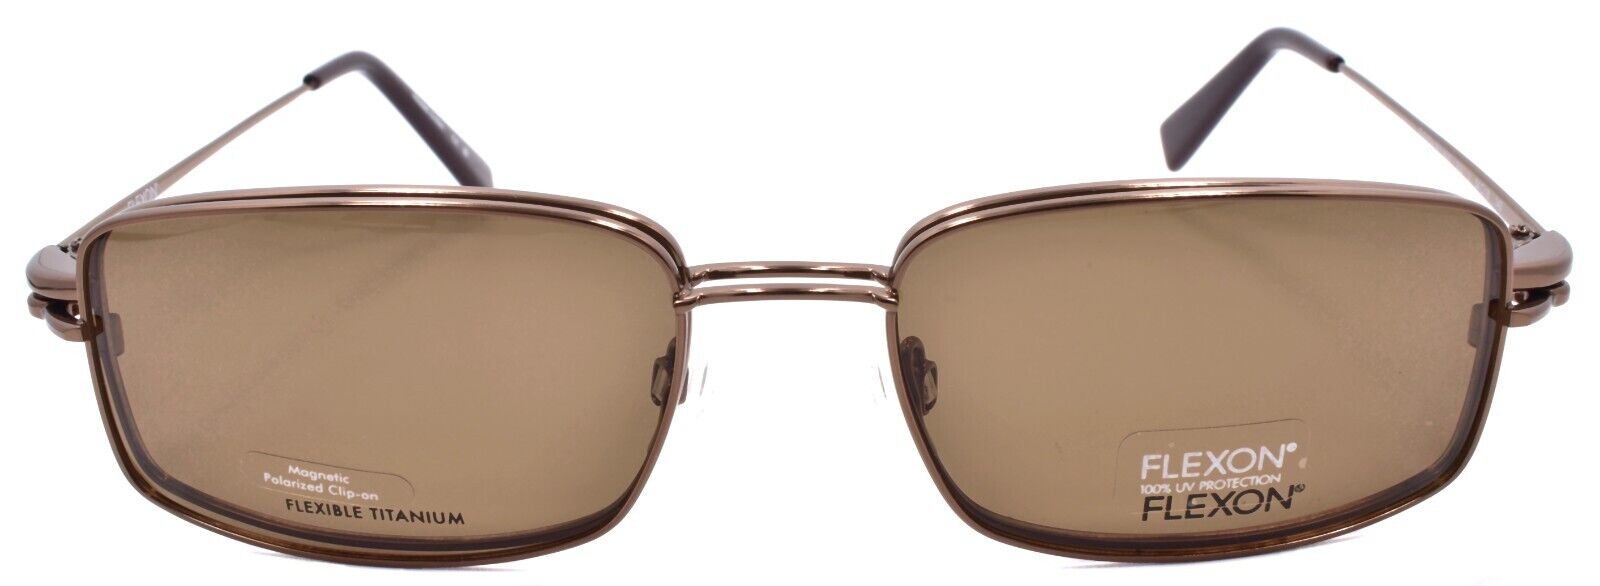 3-Flexon FLX 901 MAG 210 Men's Eyeglasses Brown 54-18-140 + Clip On Sunglasses-750666972967-IKSpecs